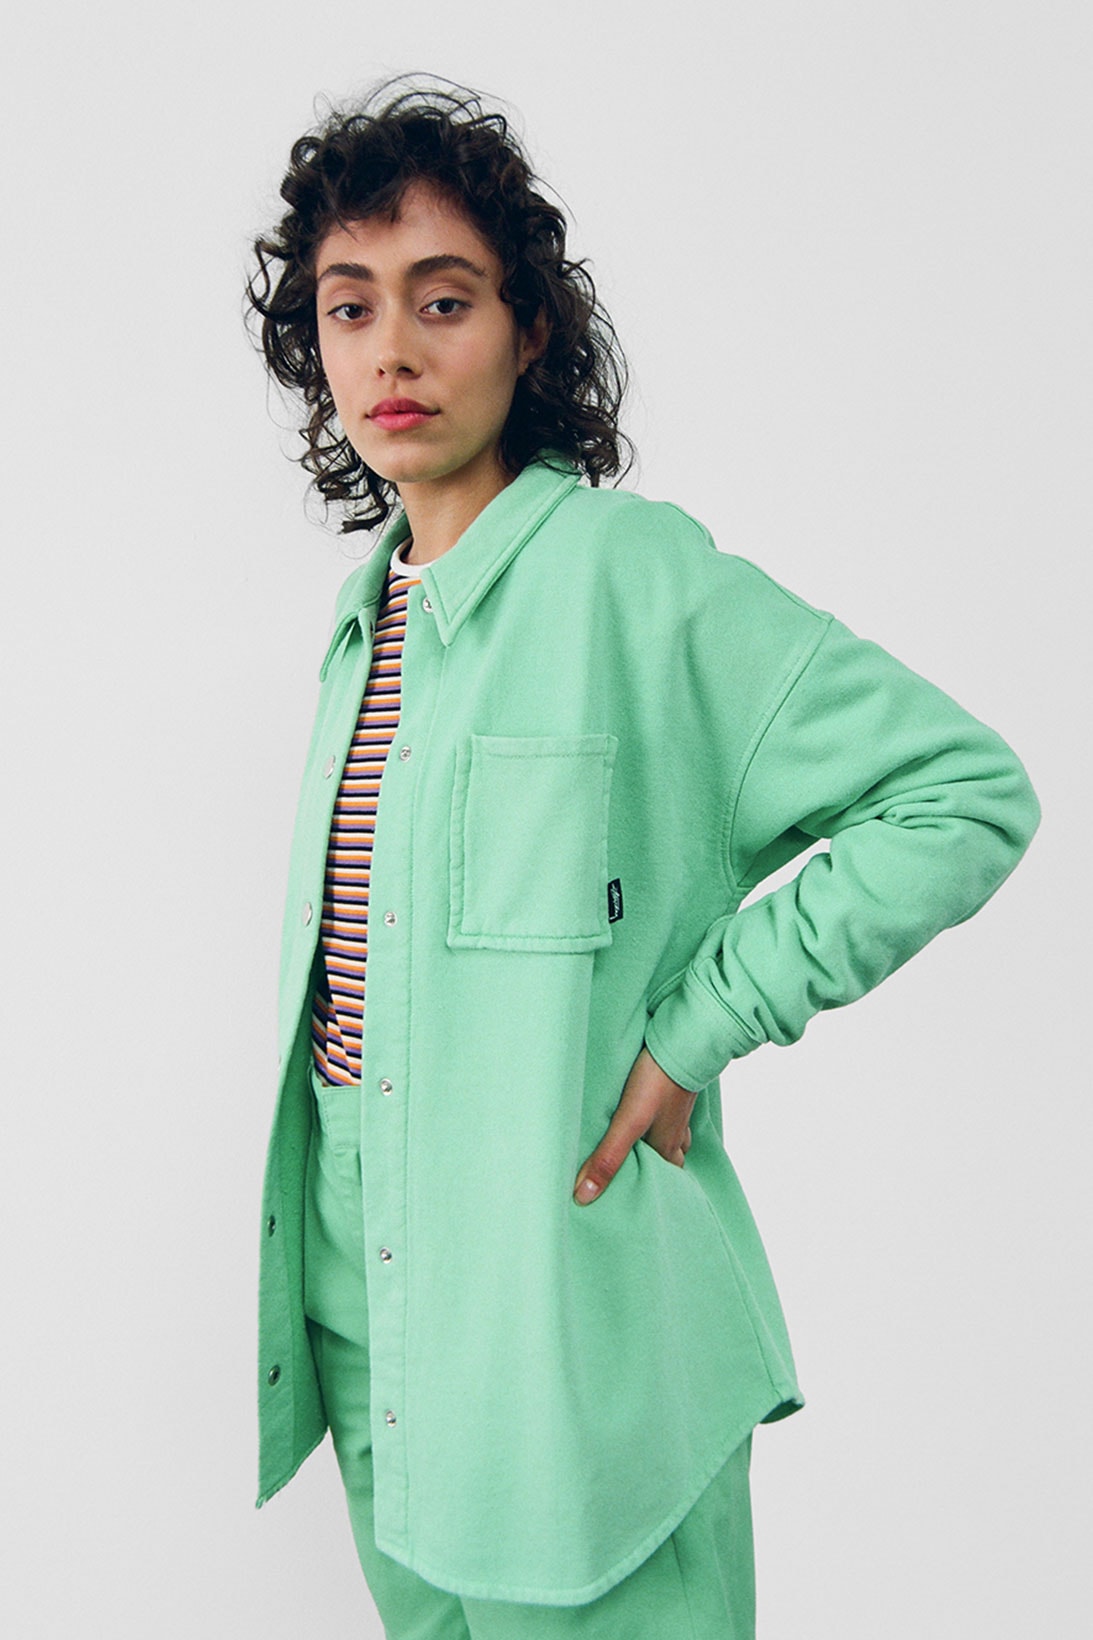 stussy spring 2021 collection lookbook womenswear mint green shirt jacket shacket